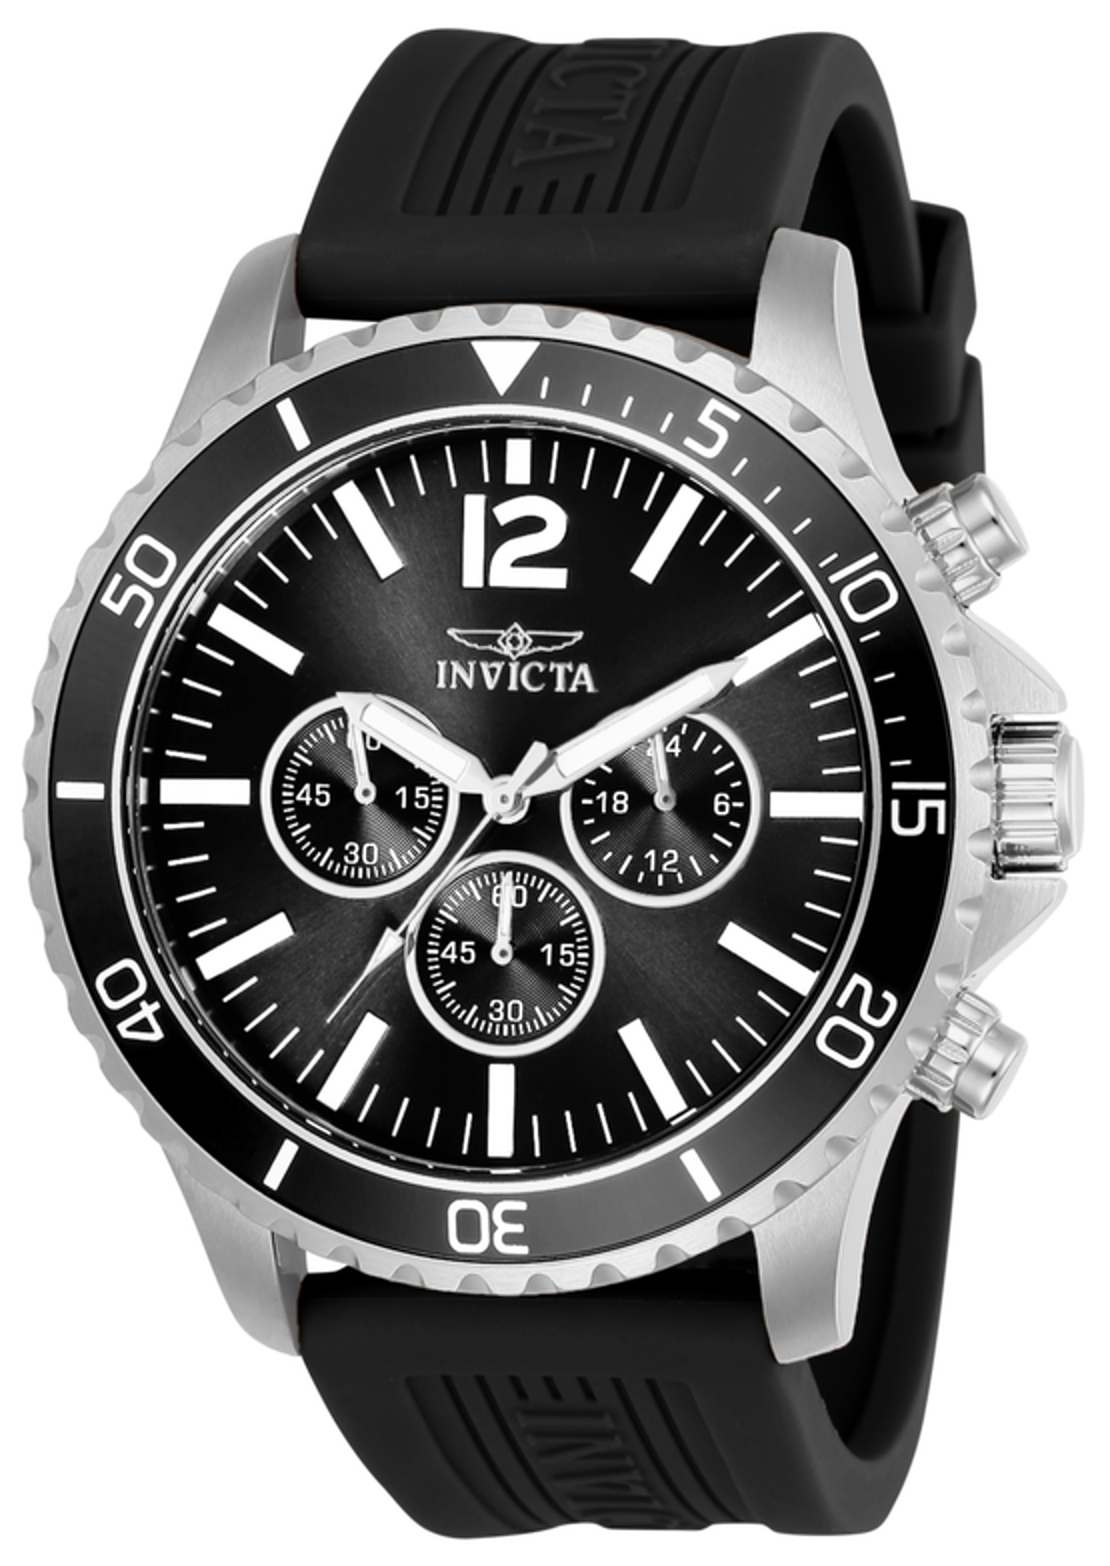 שעון Invicta Pro Diver לגבר דגם 24393